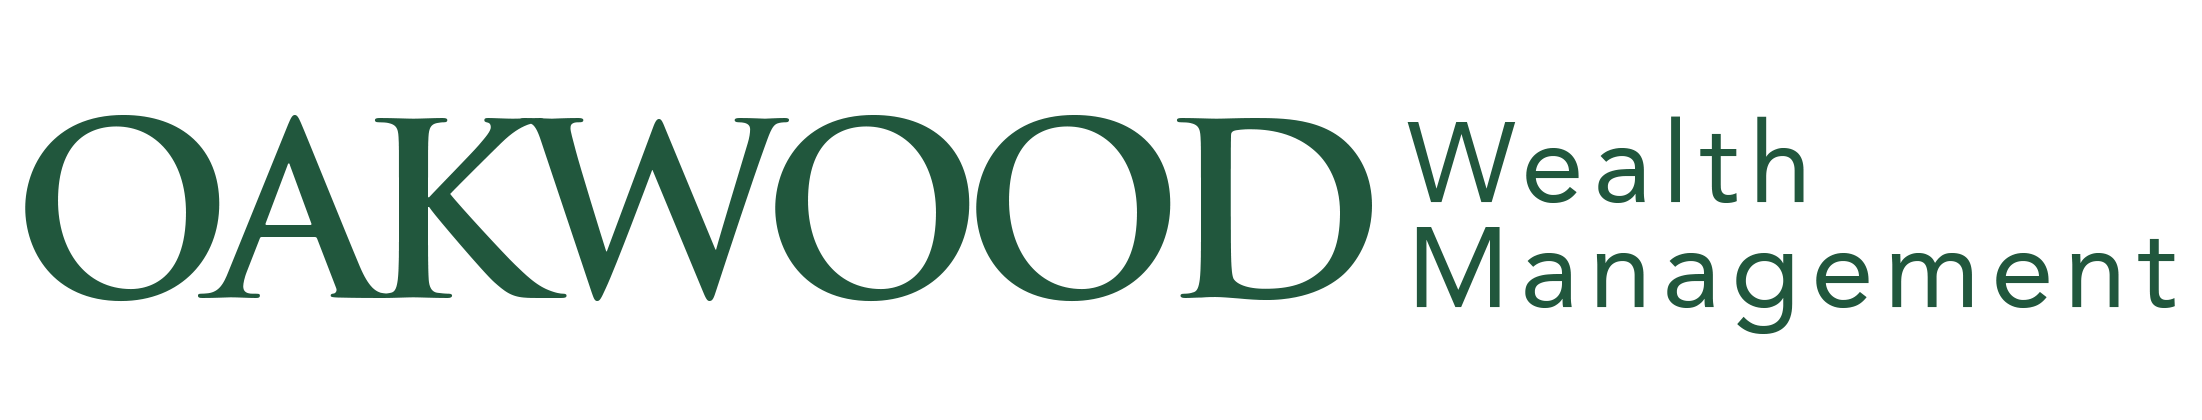 Oakwood Wealth Management Logo